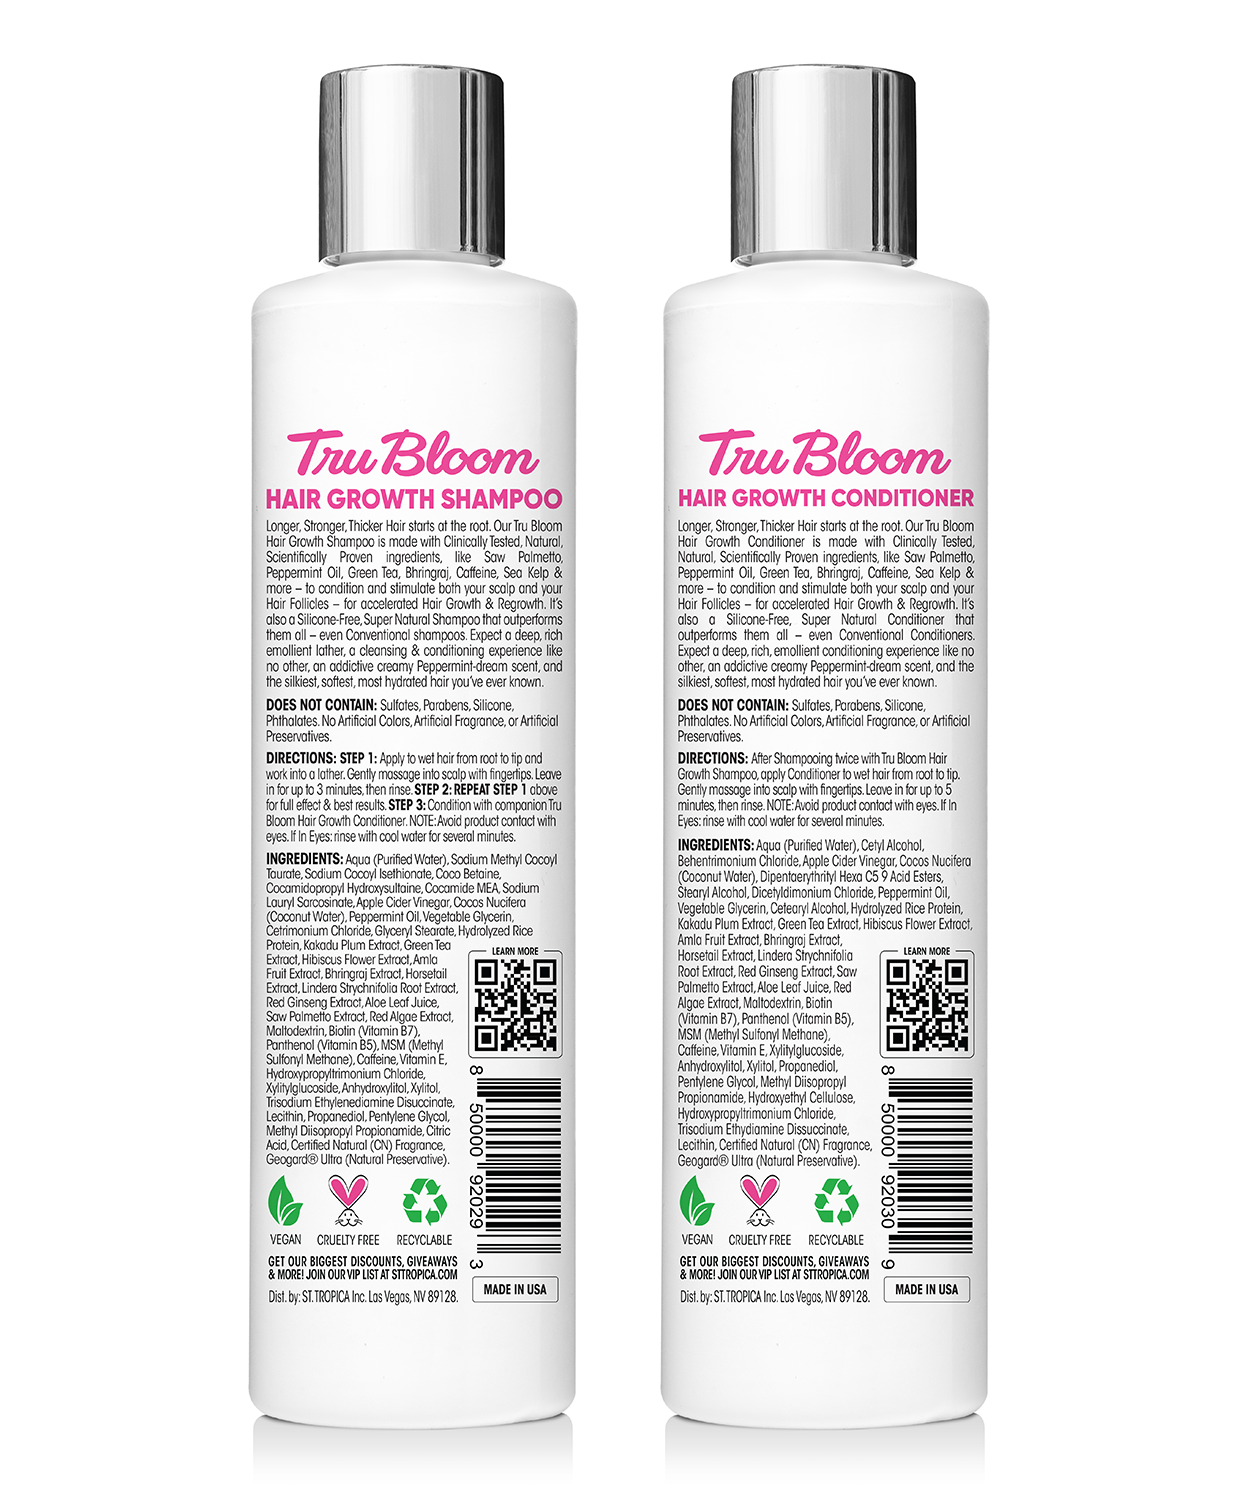 
  
  ST. TROPICA Tru Bloom 3-Step Hair Growth System
  
